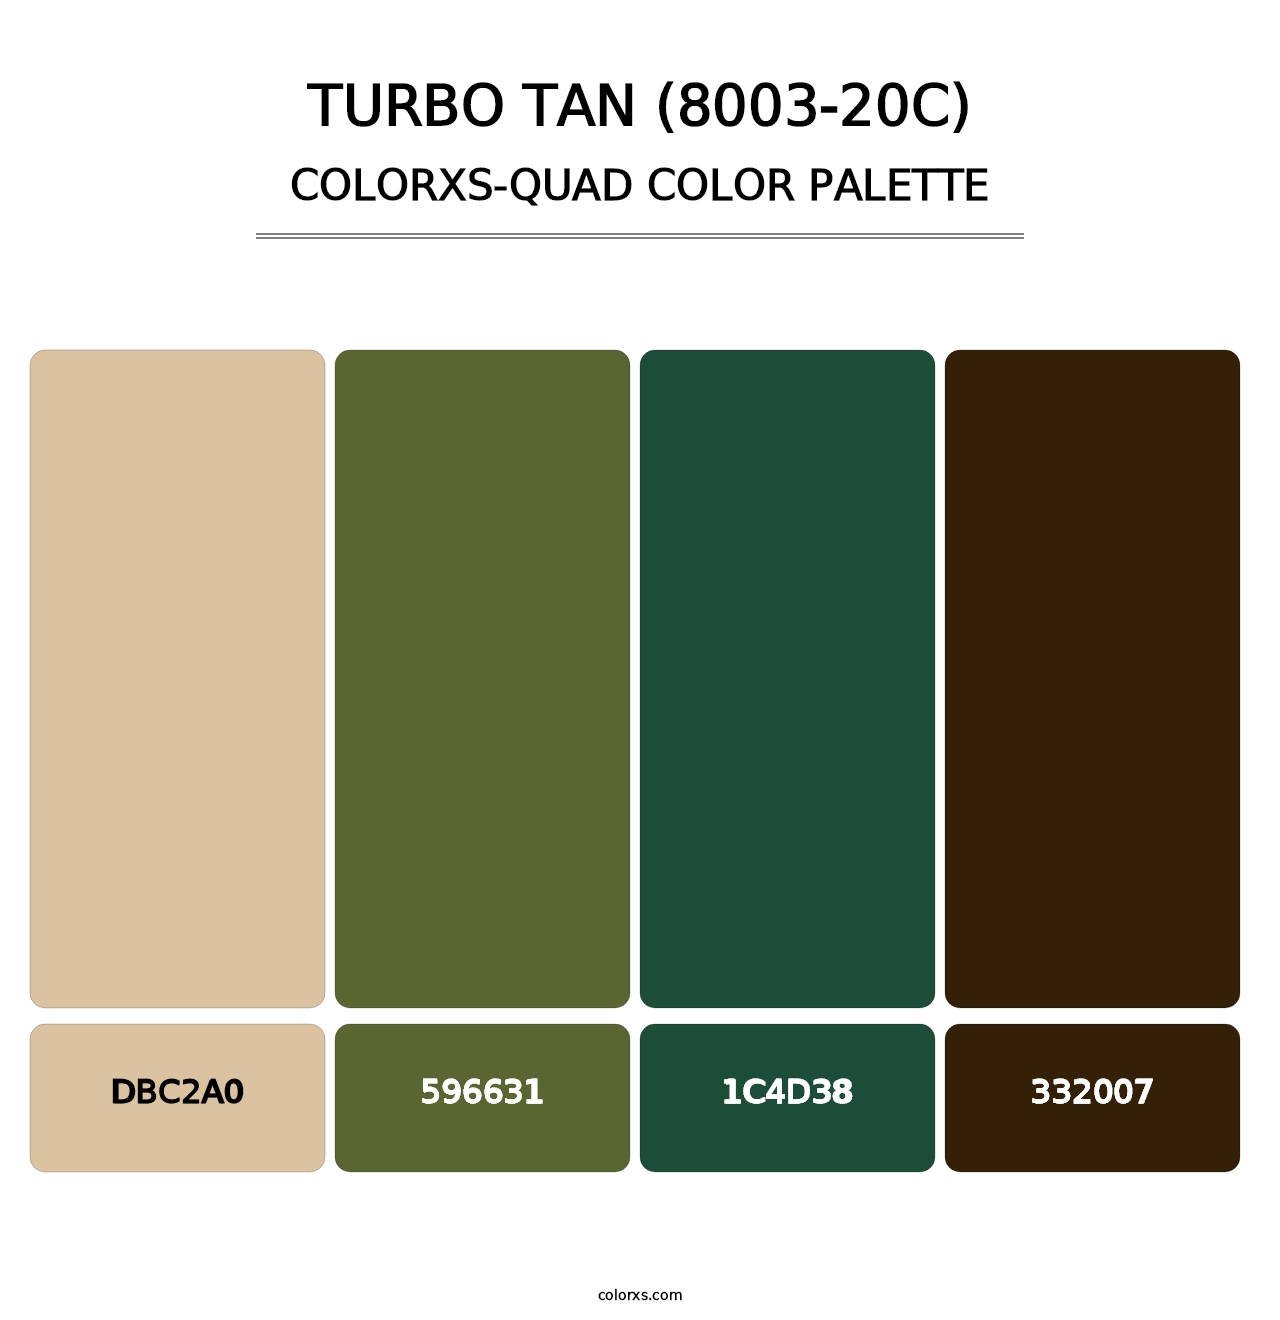 Turbo Tan (8003-20C) - Colorxs Quad Palette